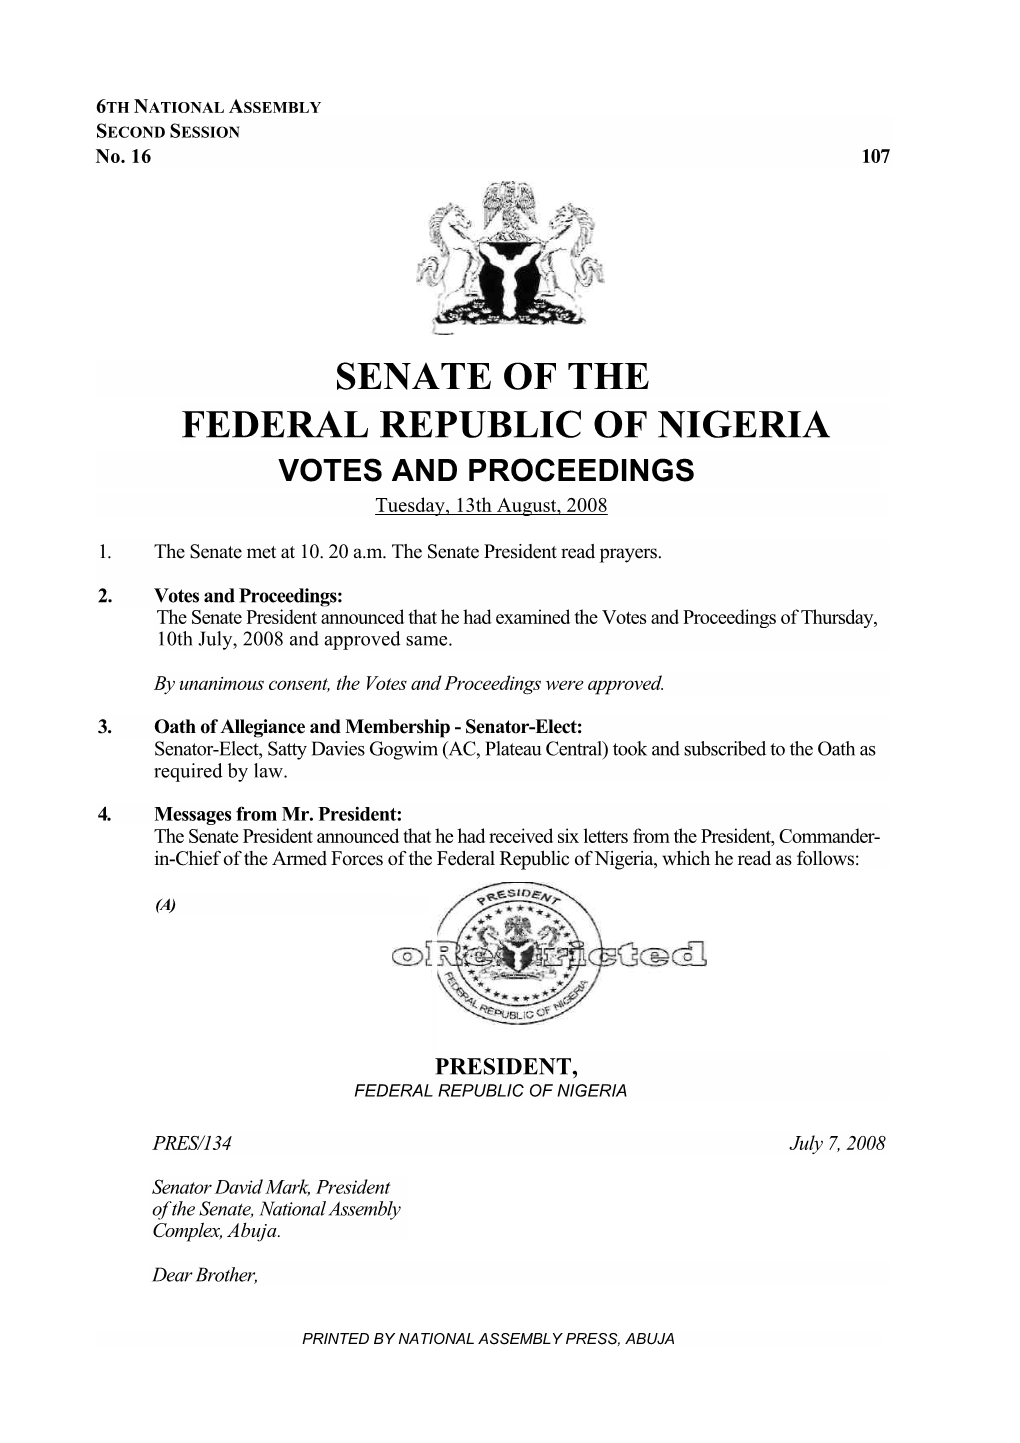 Senate of the Federal Republic of Nigeria for Consideration